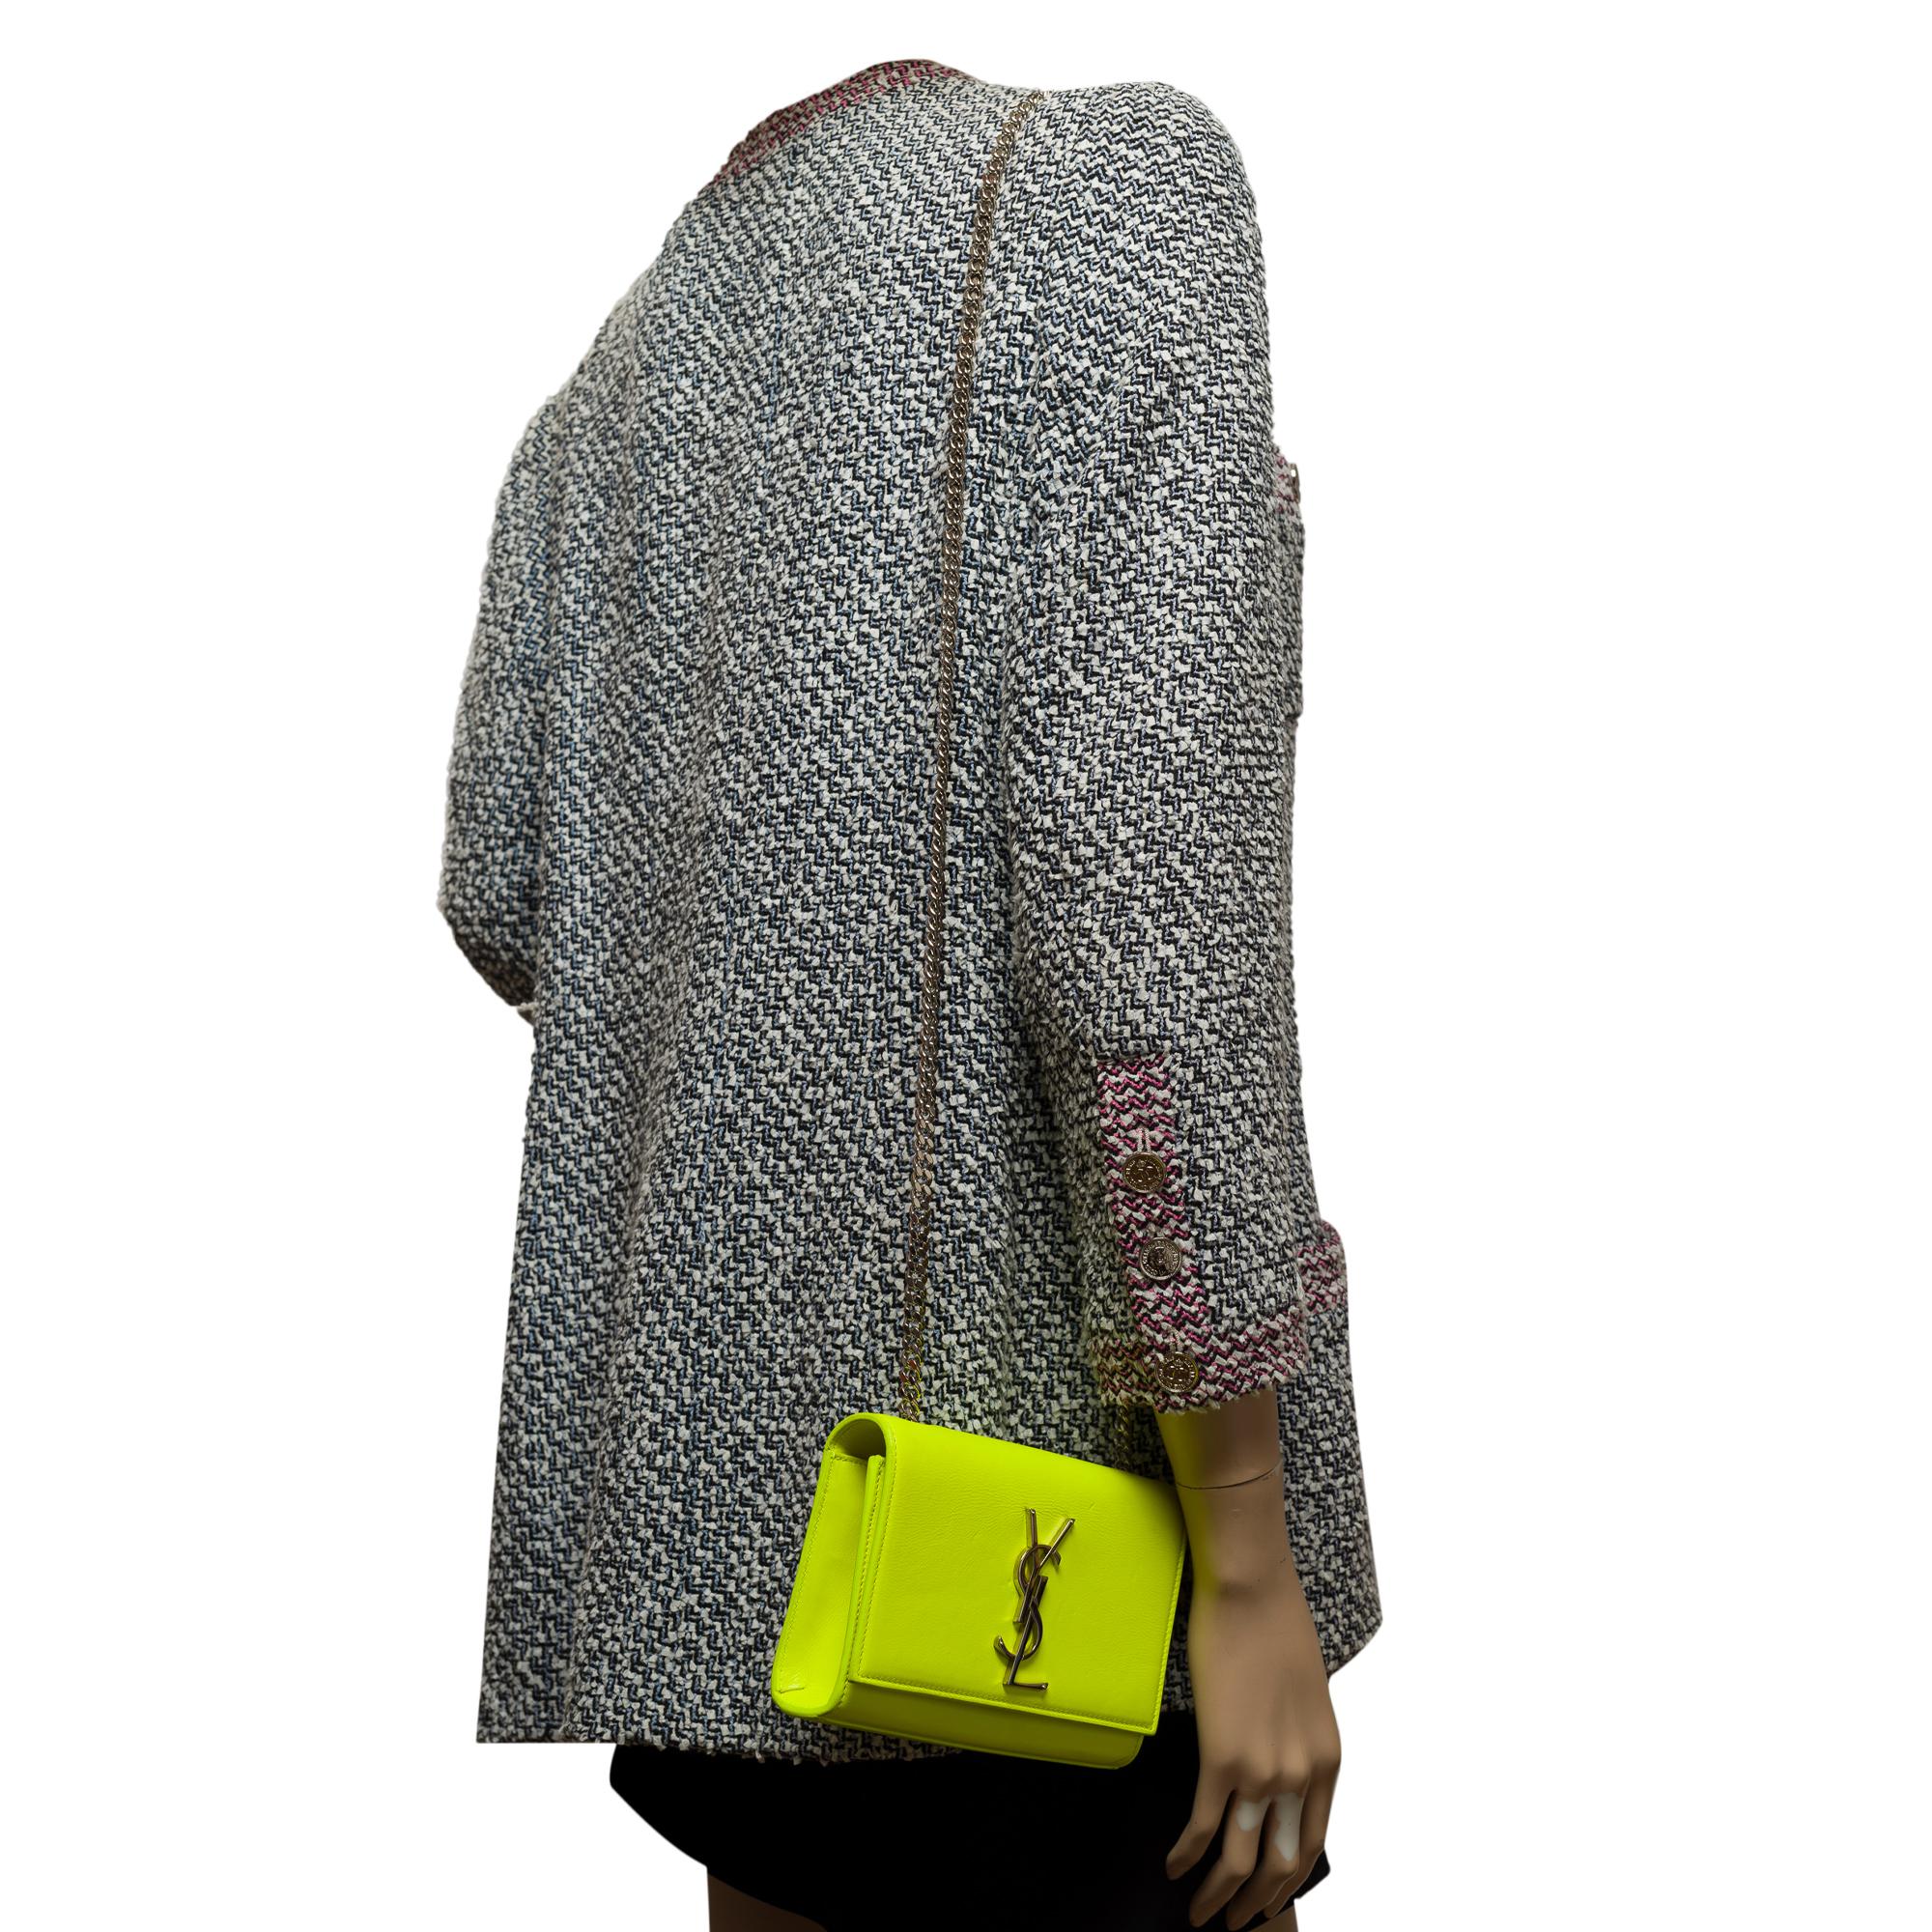 Exquisite Saint Laurent Kate shoulder bag in neon yellow leather, SHW 3